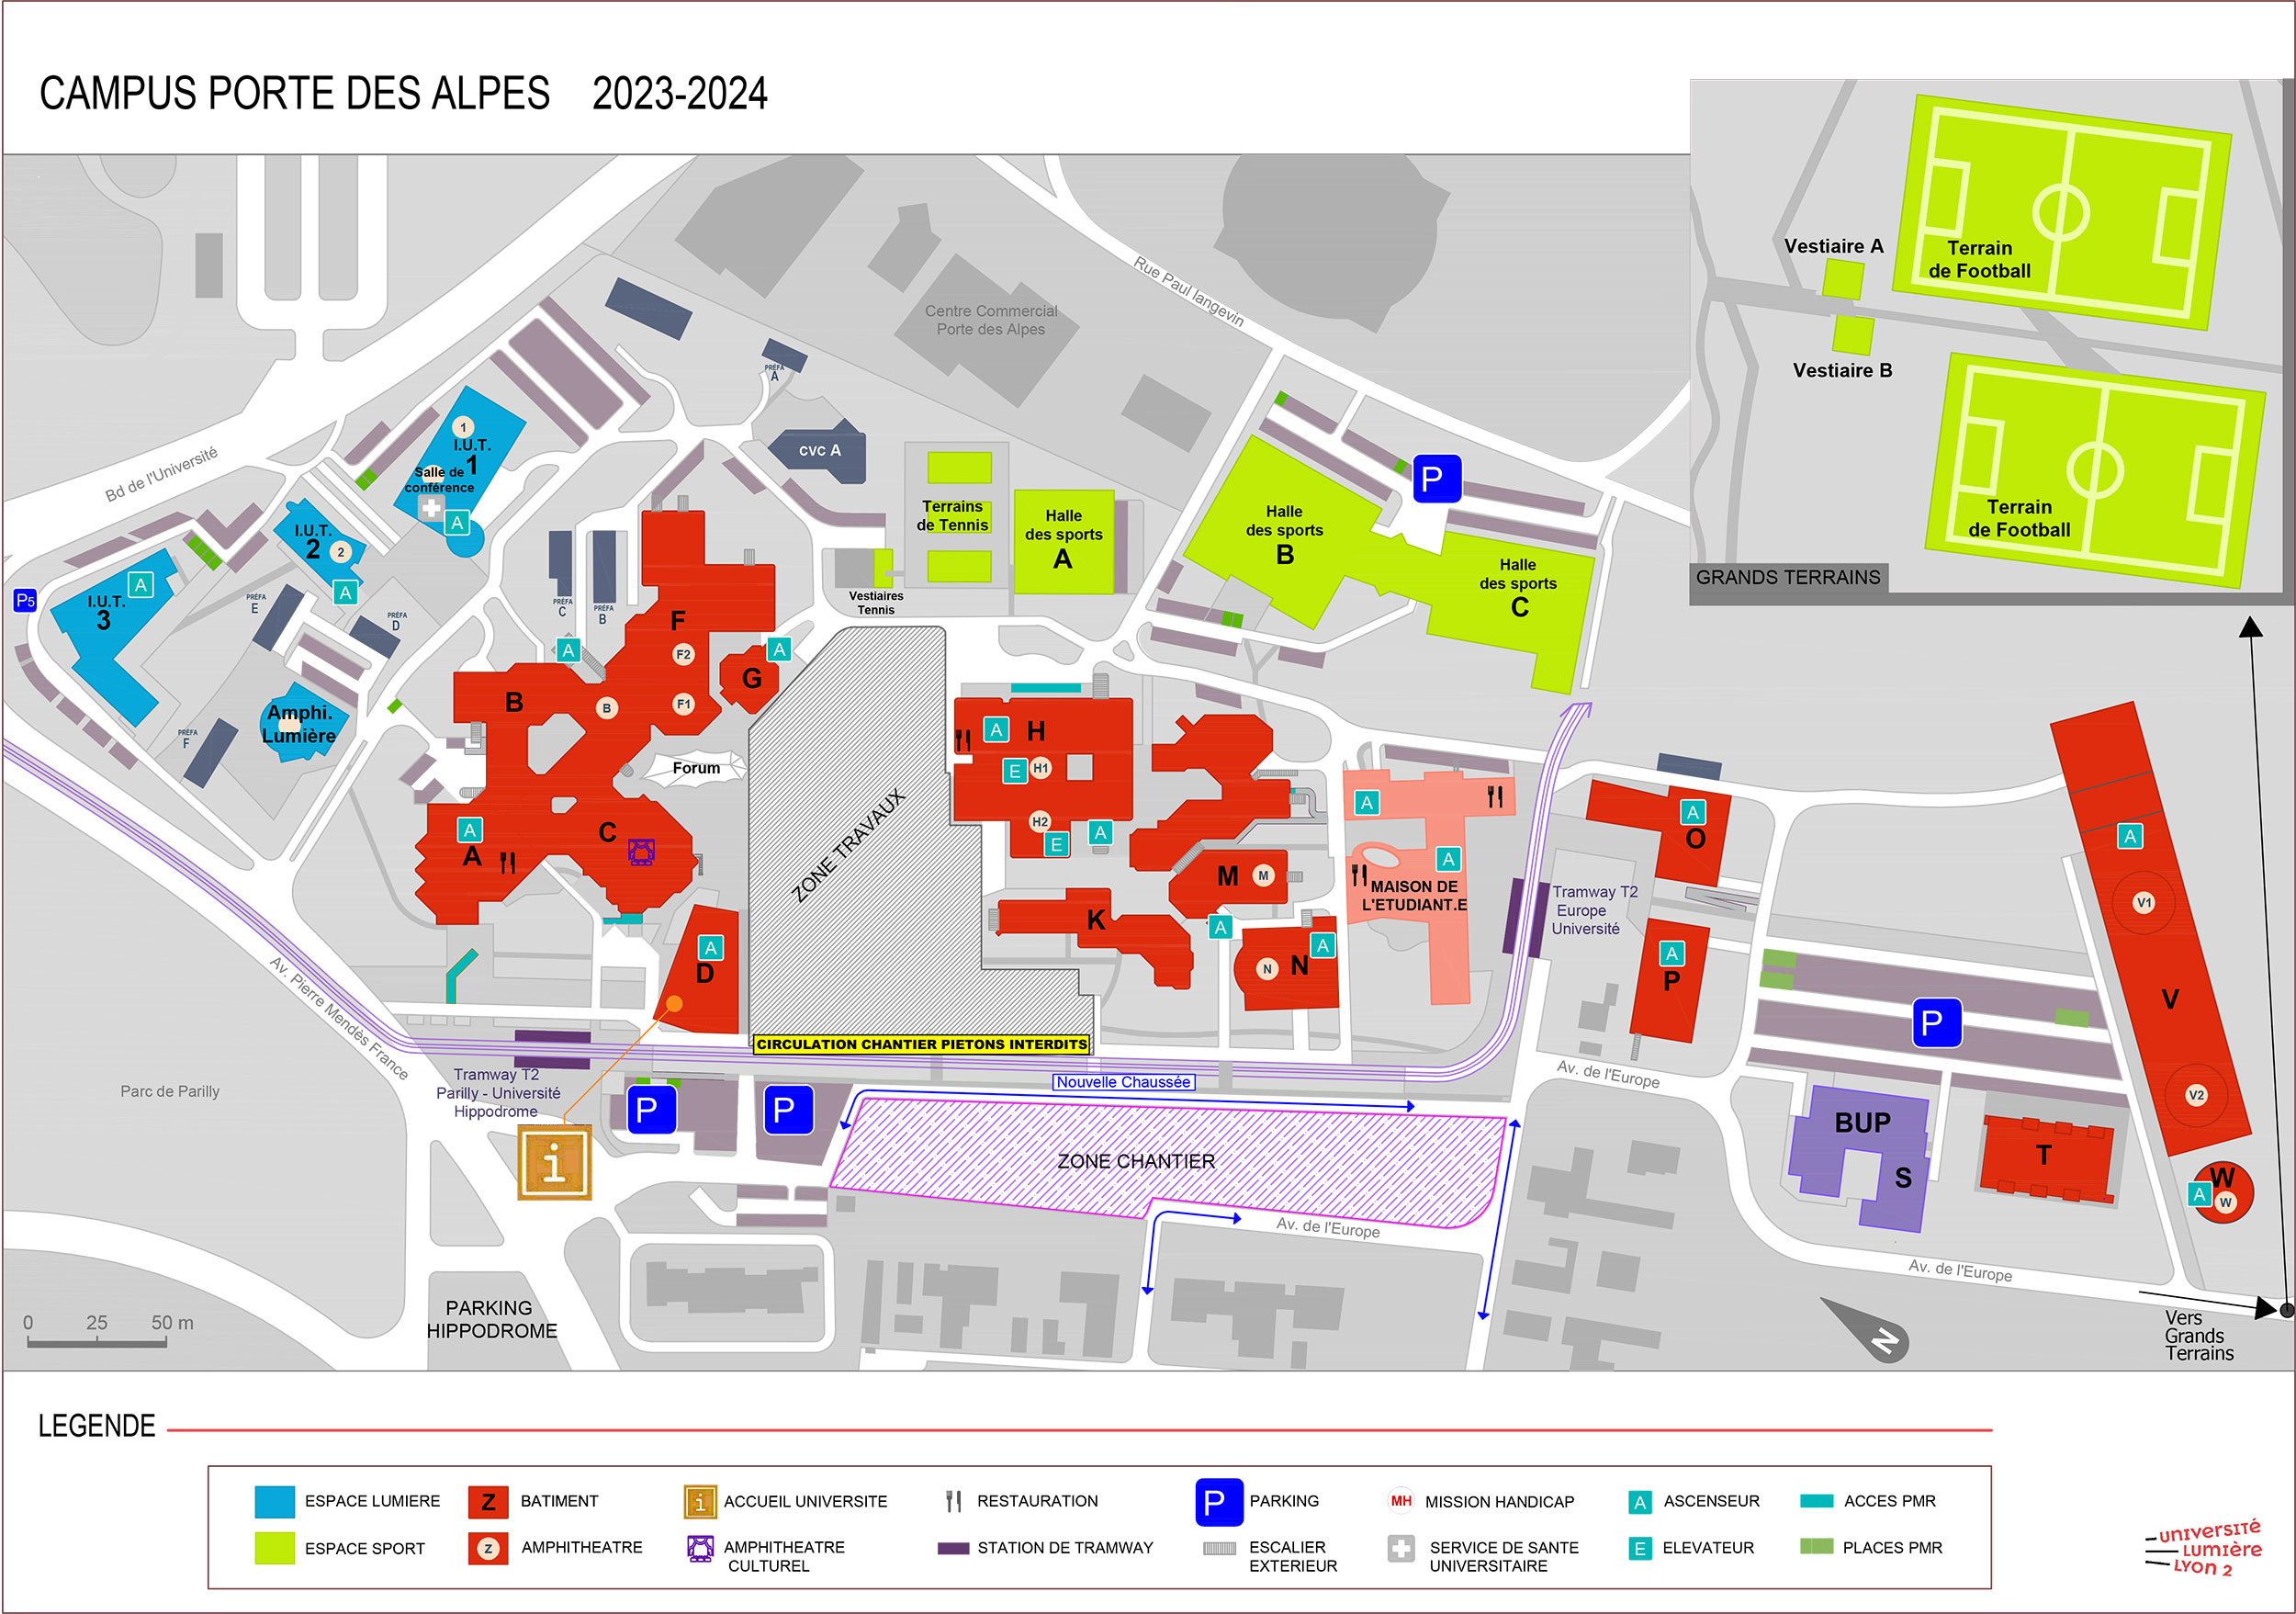 Plan Campus Porte des Alpes (PDA) 2023/2024